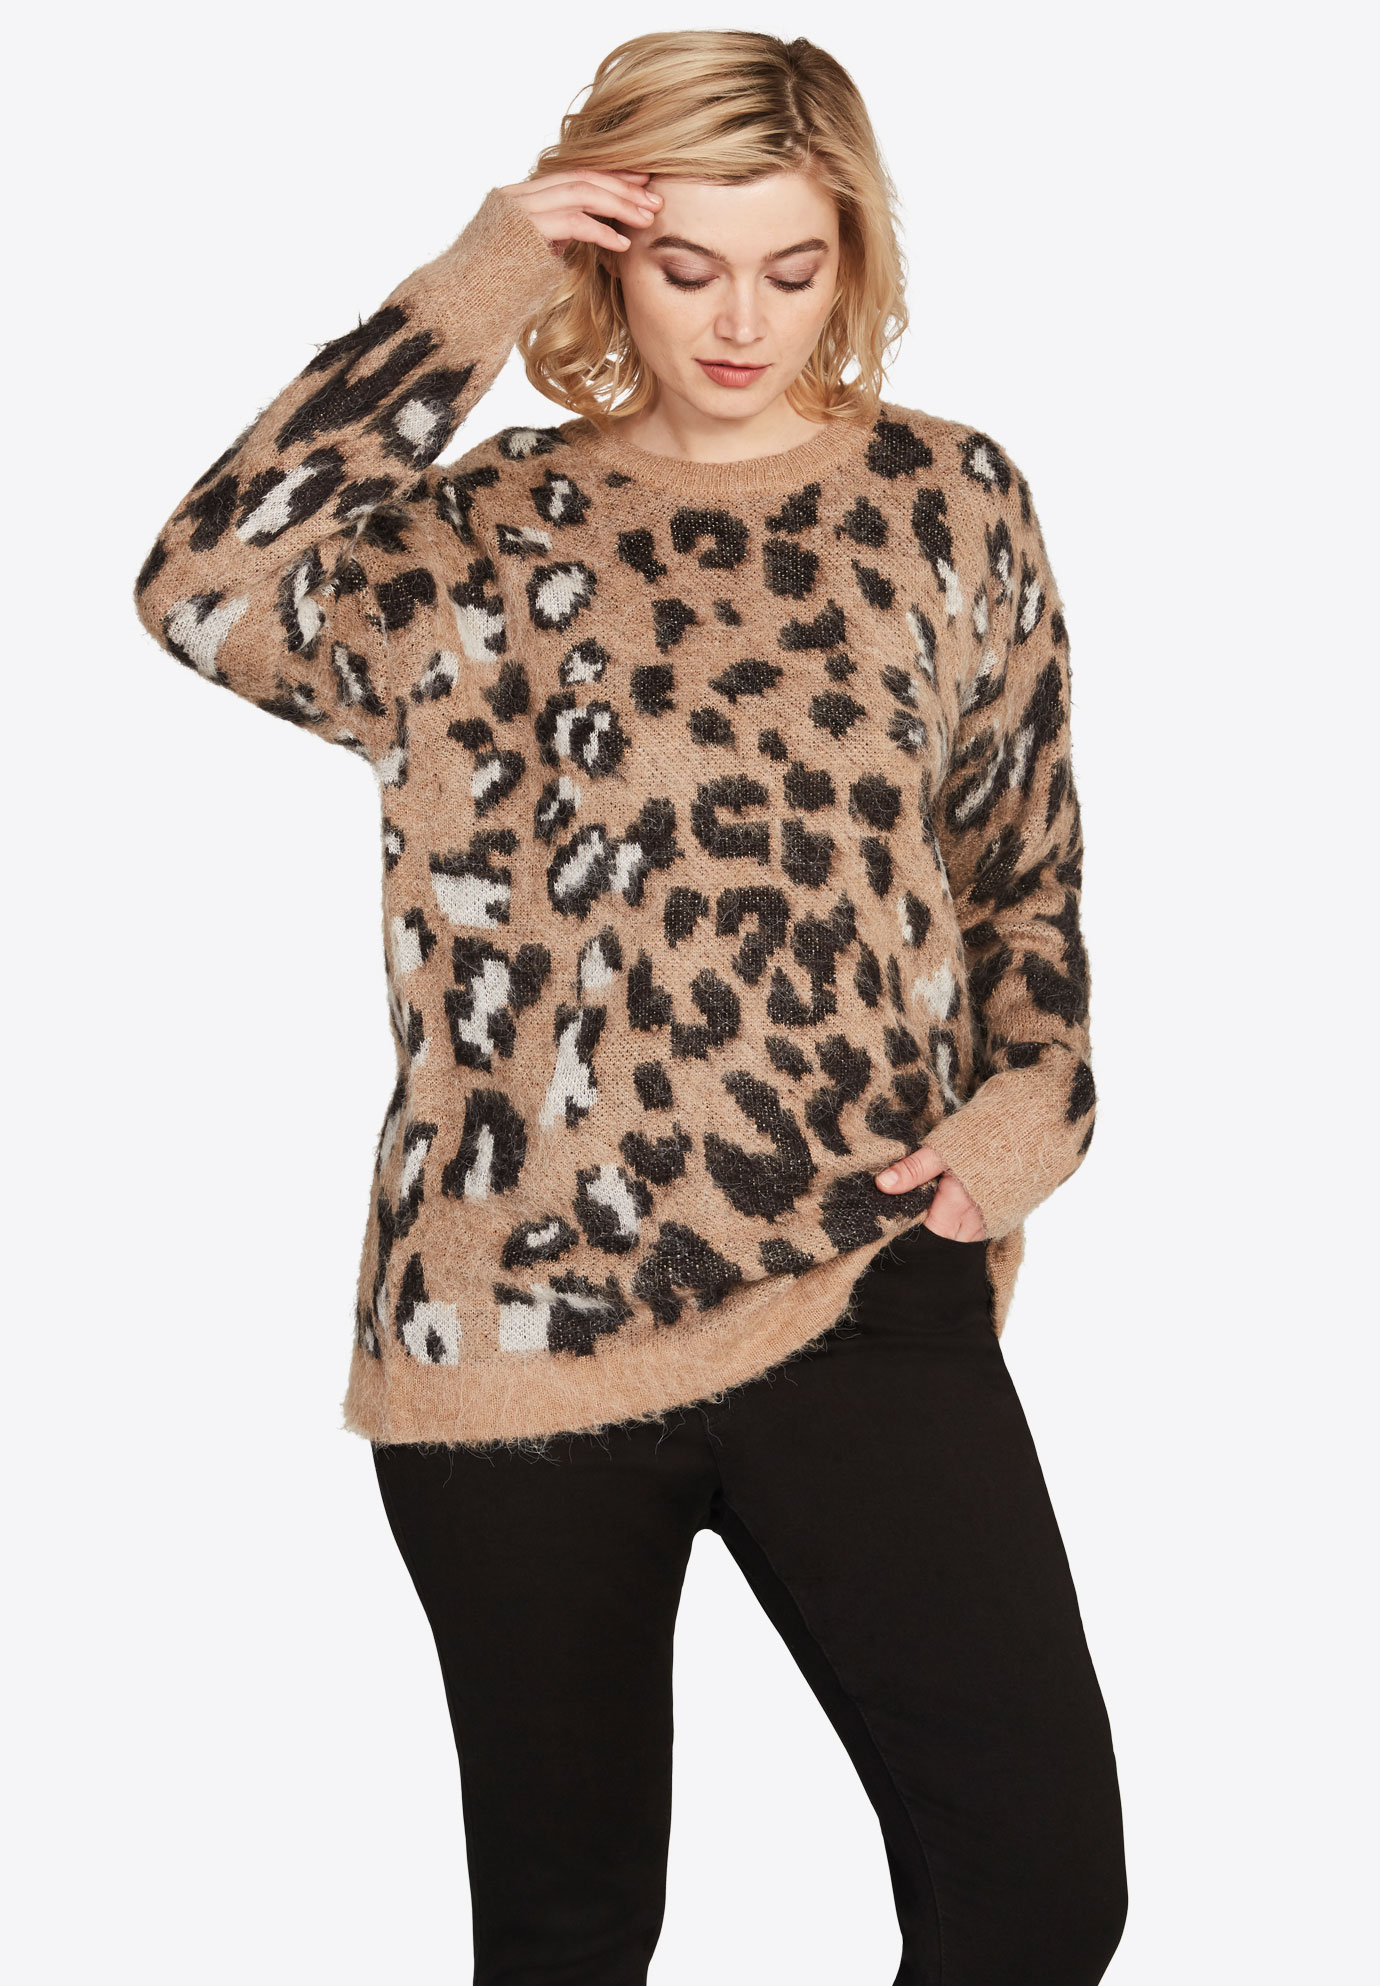 Leopard Print Sweater, 